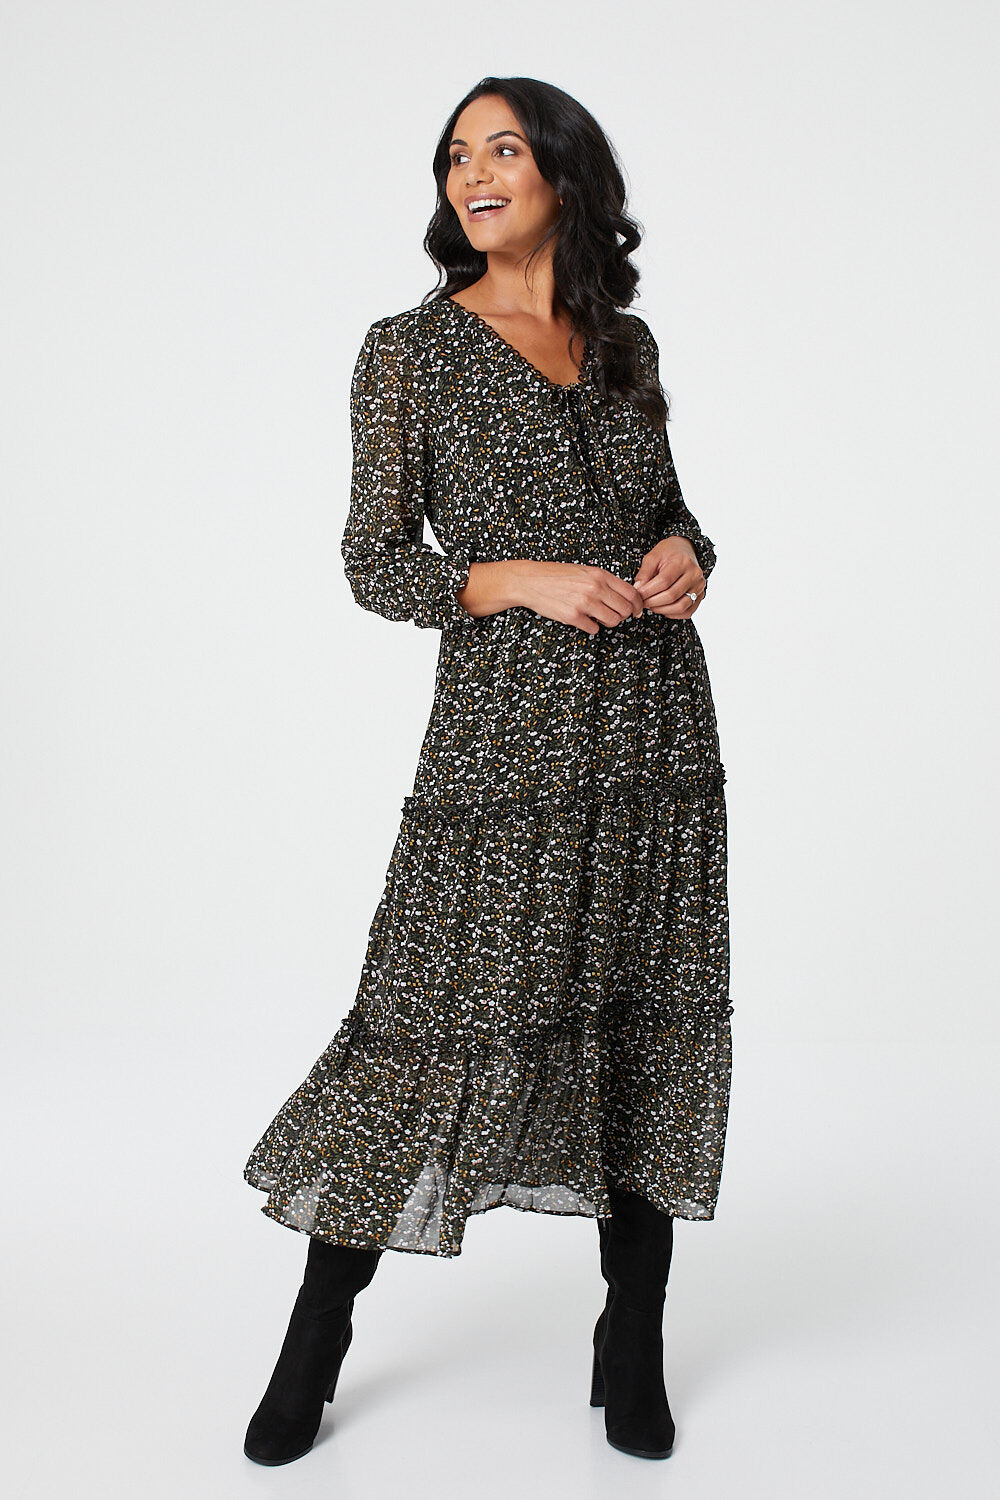 Izabel London Black - Floral Tie Front Tiered Midi Dress, Size: 18